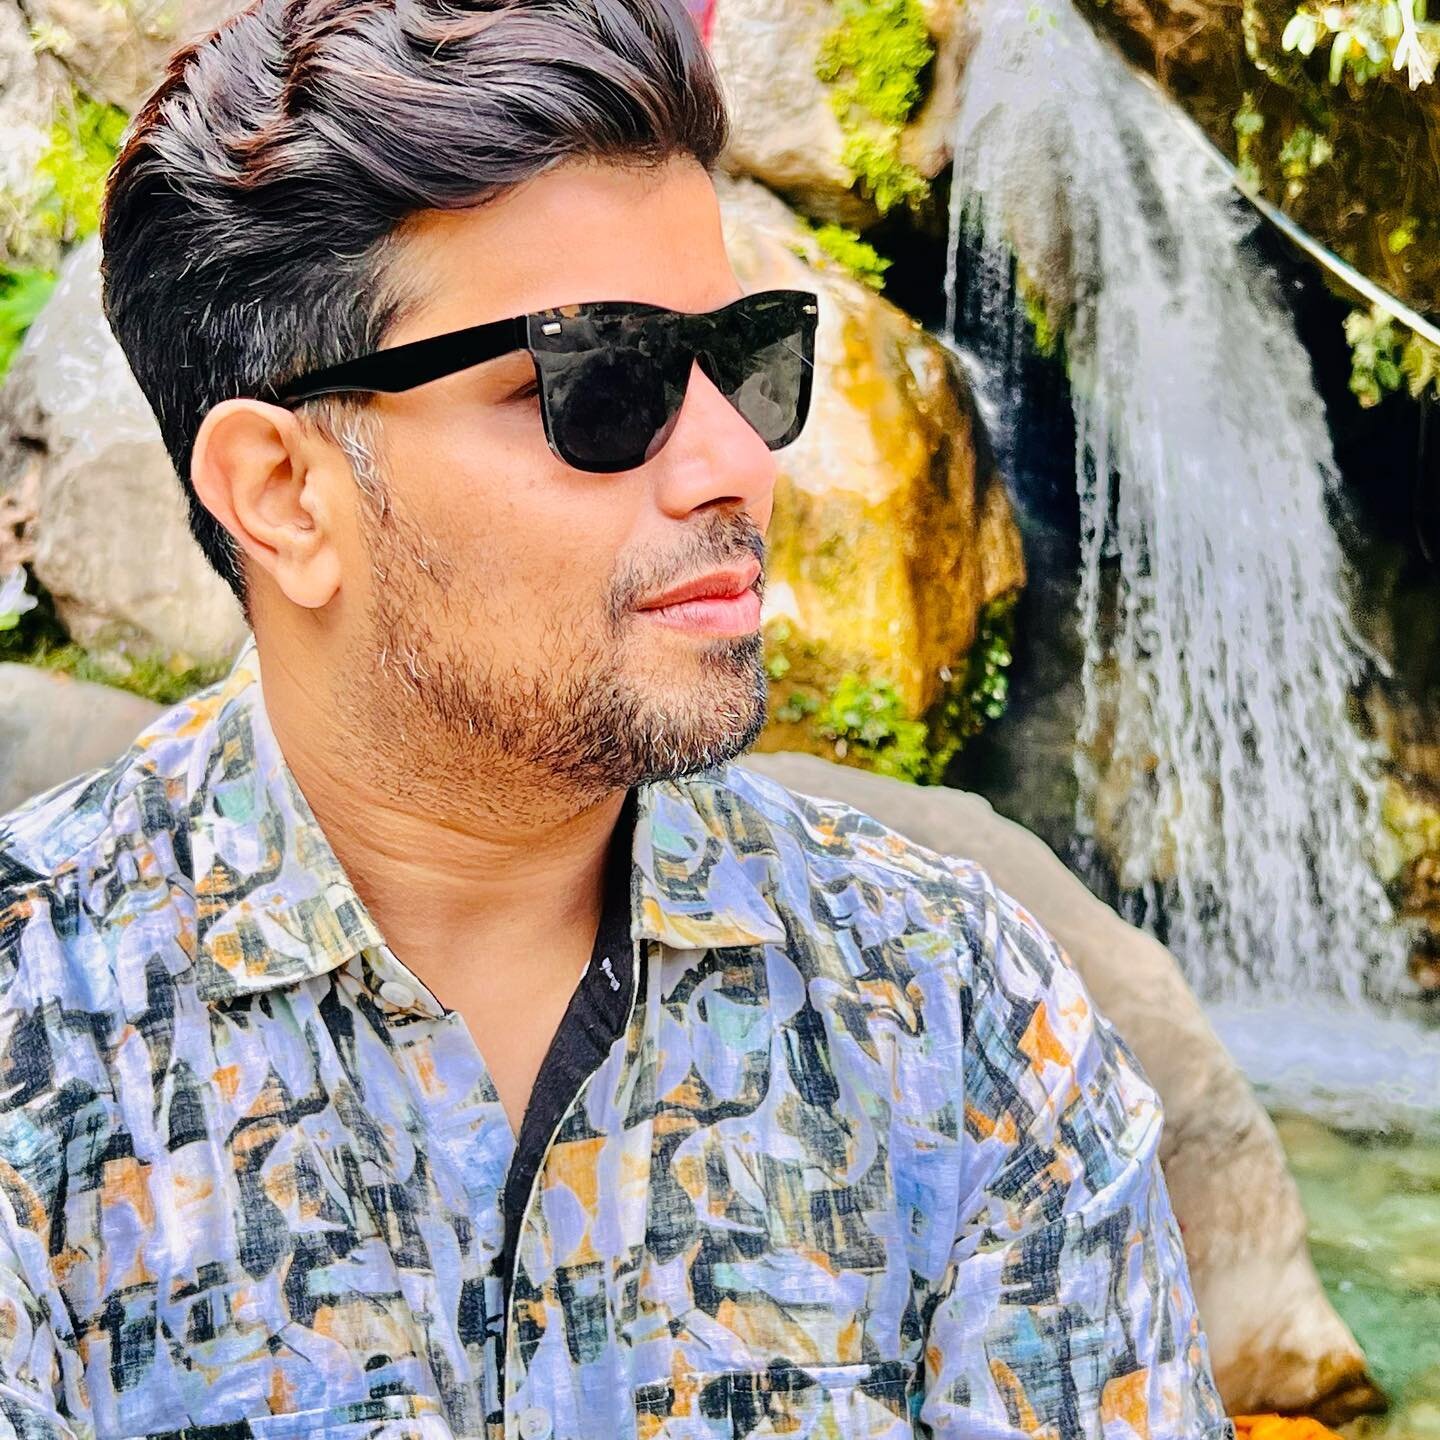 At Rishikesh waterfall